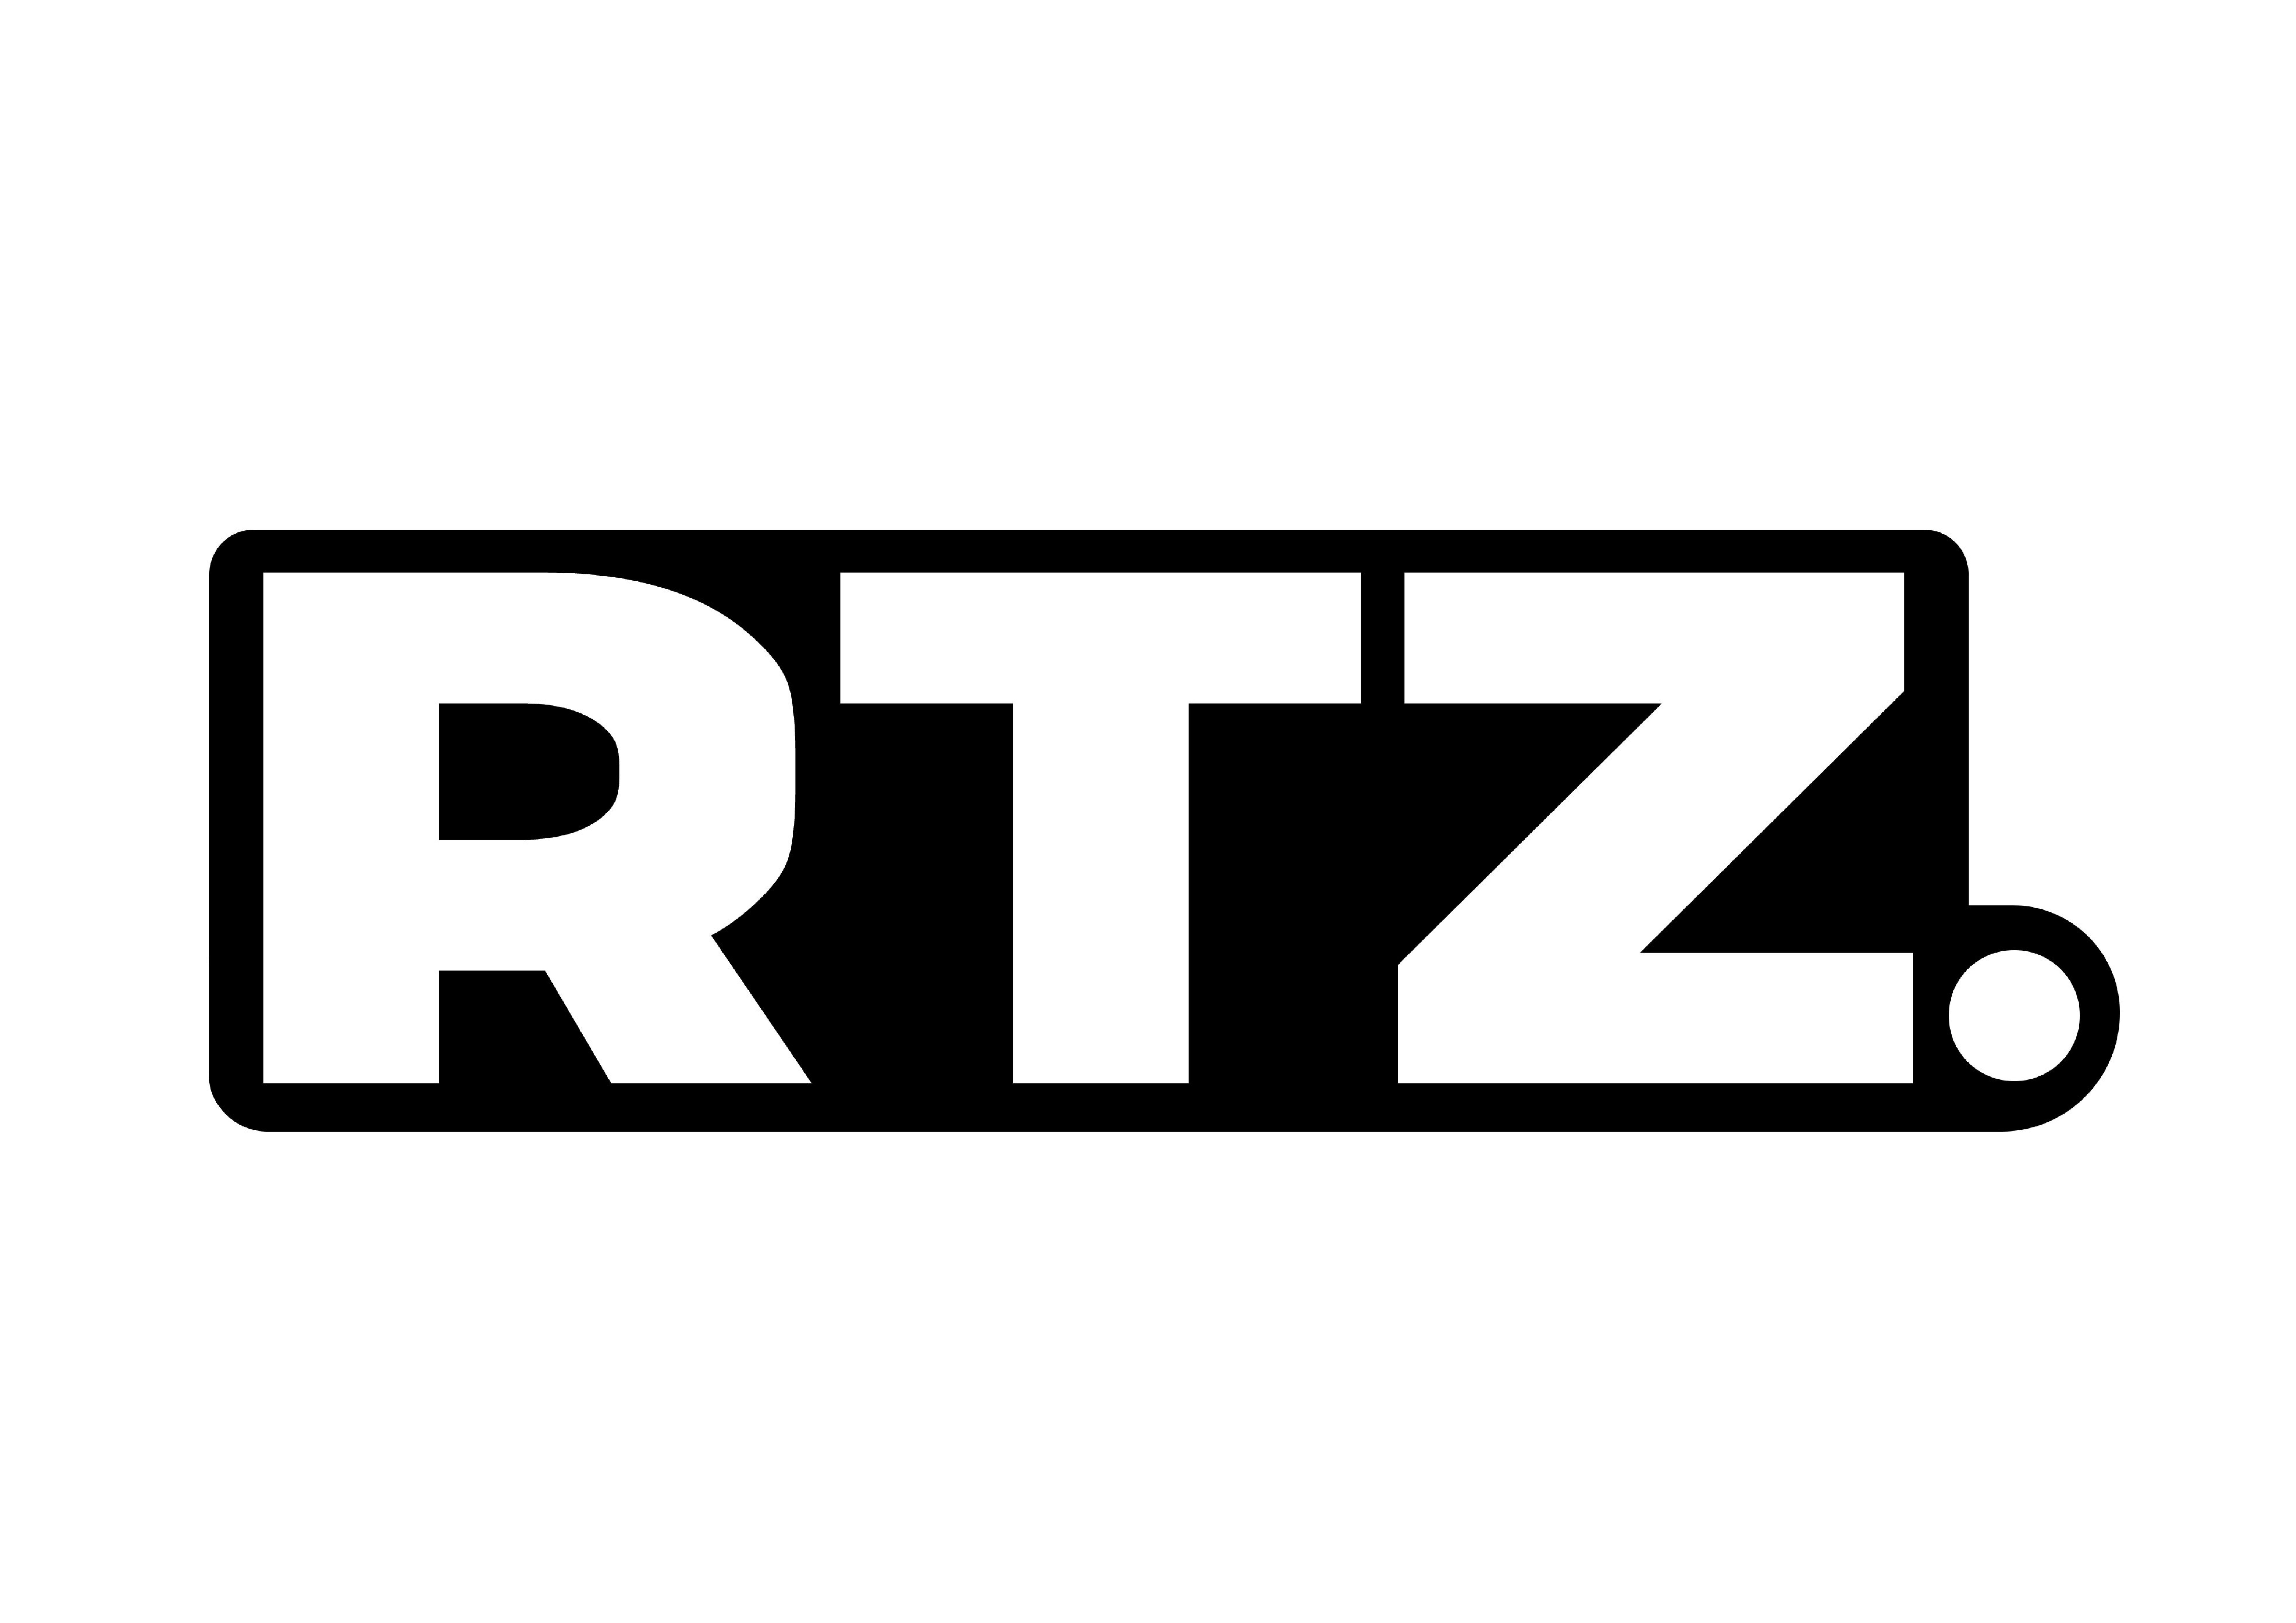 RTZ Rootz